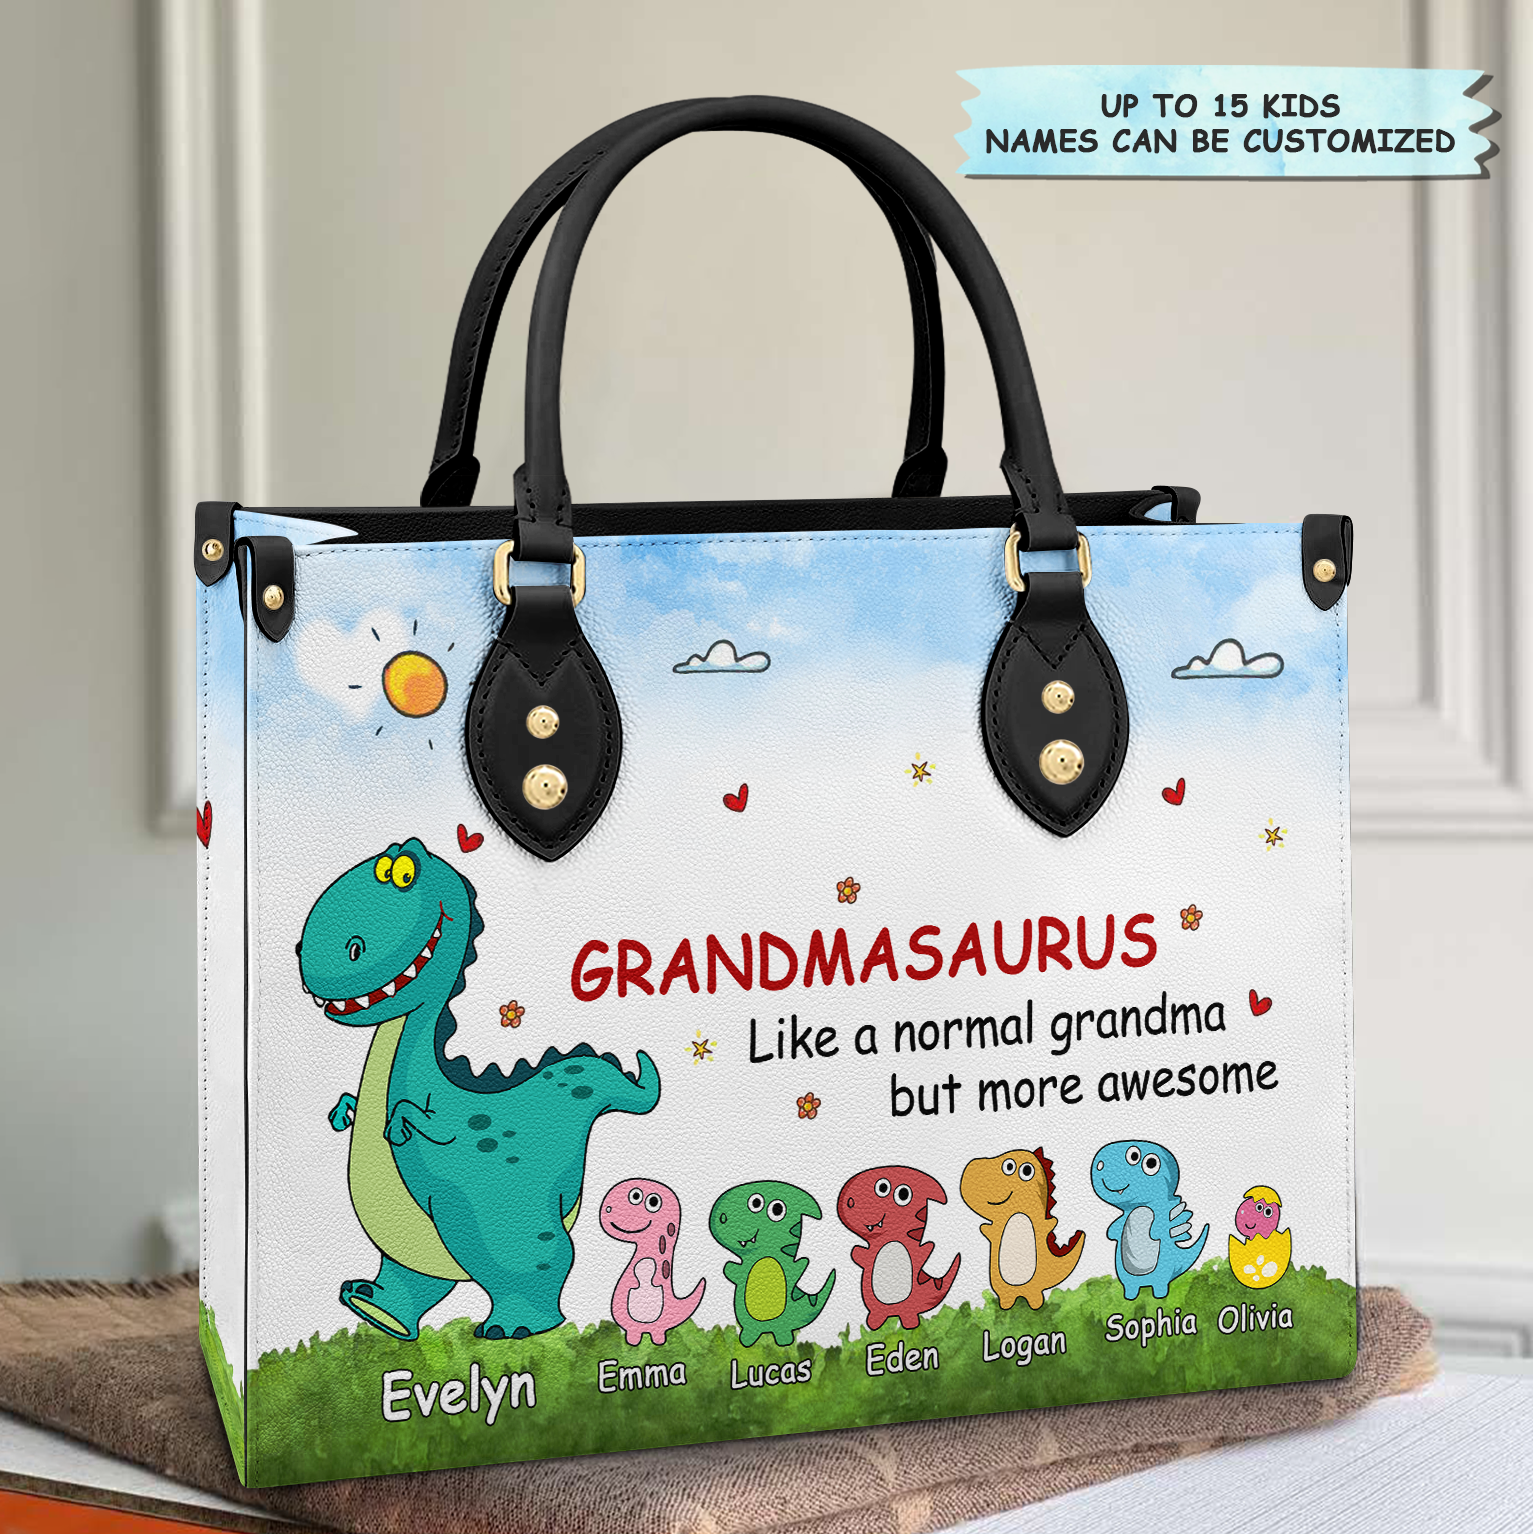 Personalized Leather Bag - Gift For Grandma - Grandmasaurus Like A Normal Grandma But More Awesome